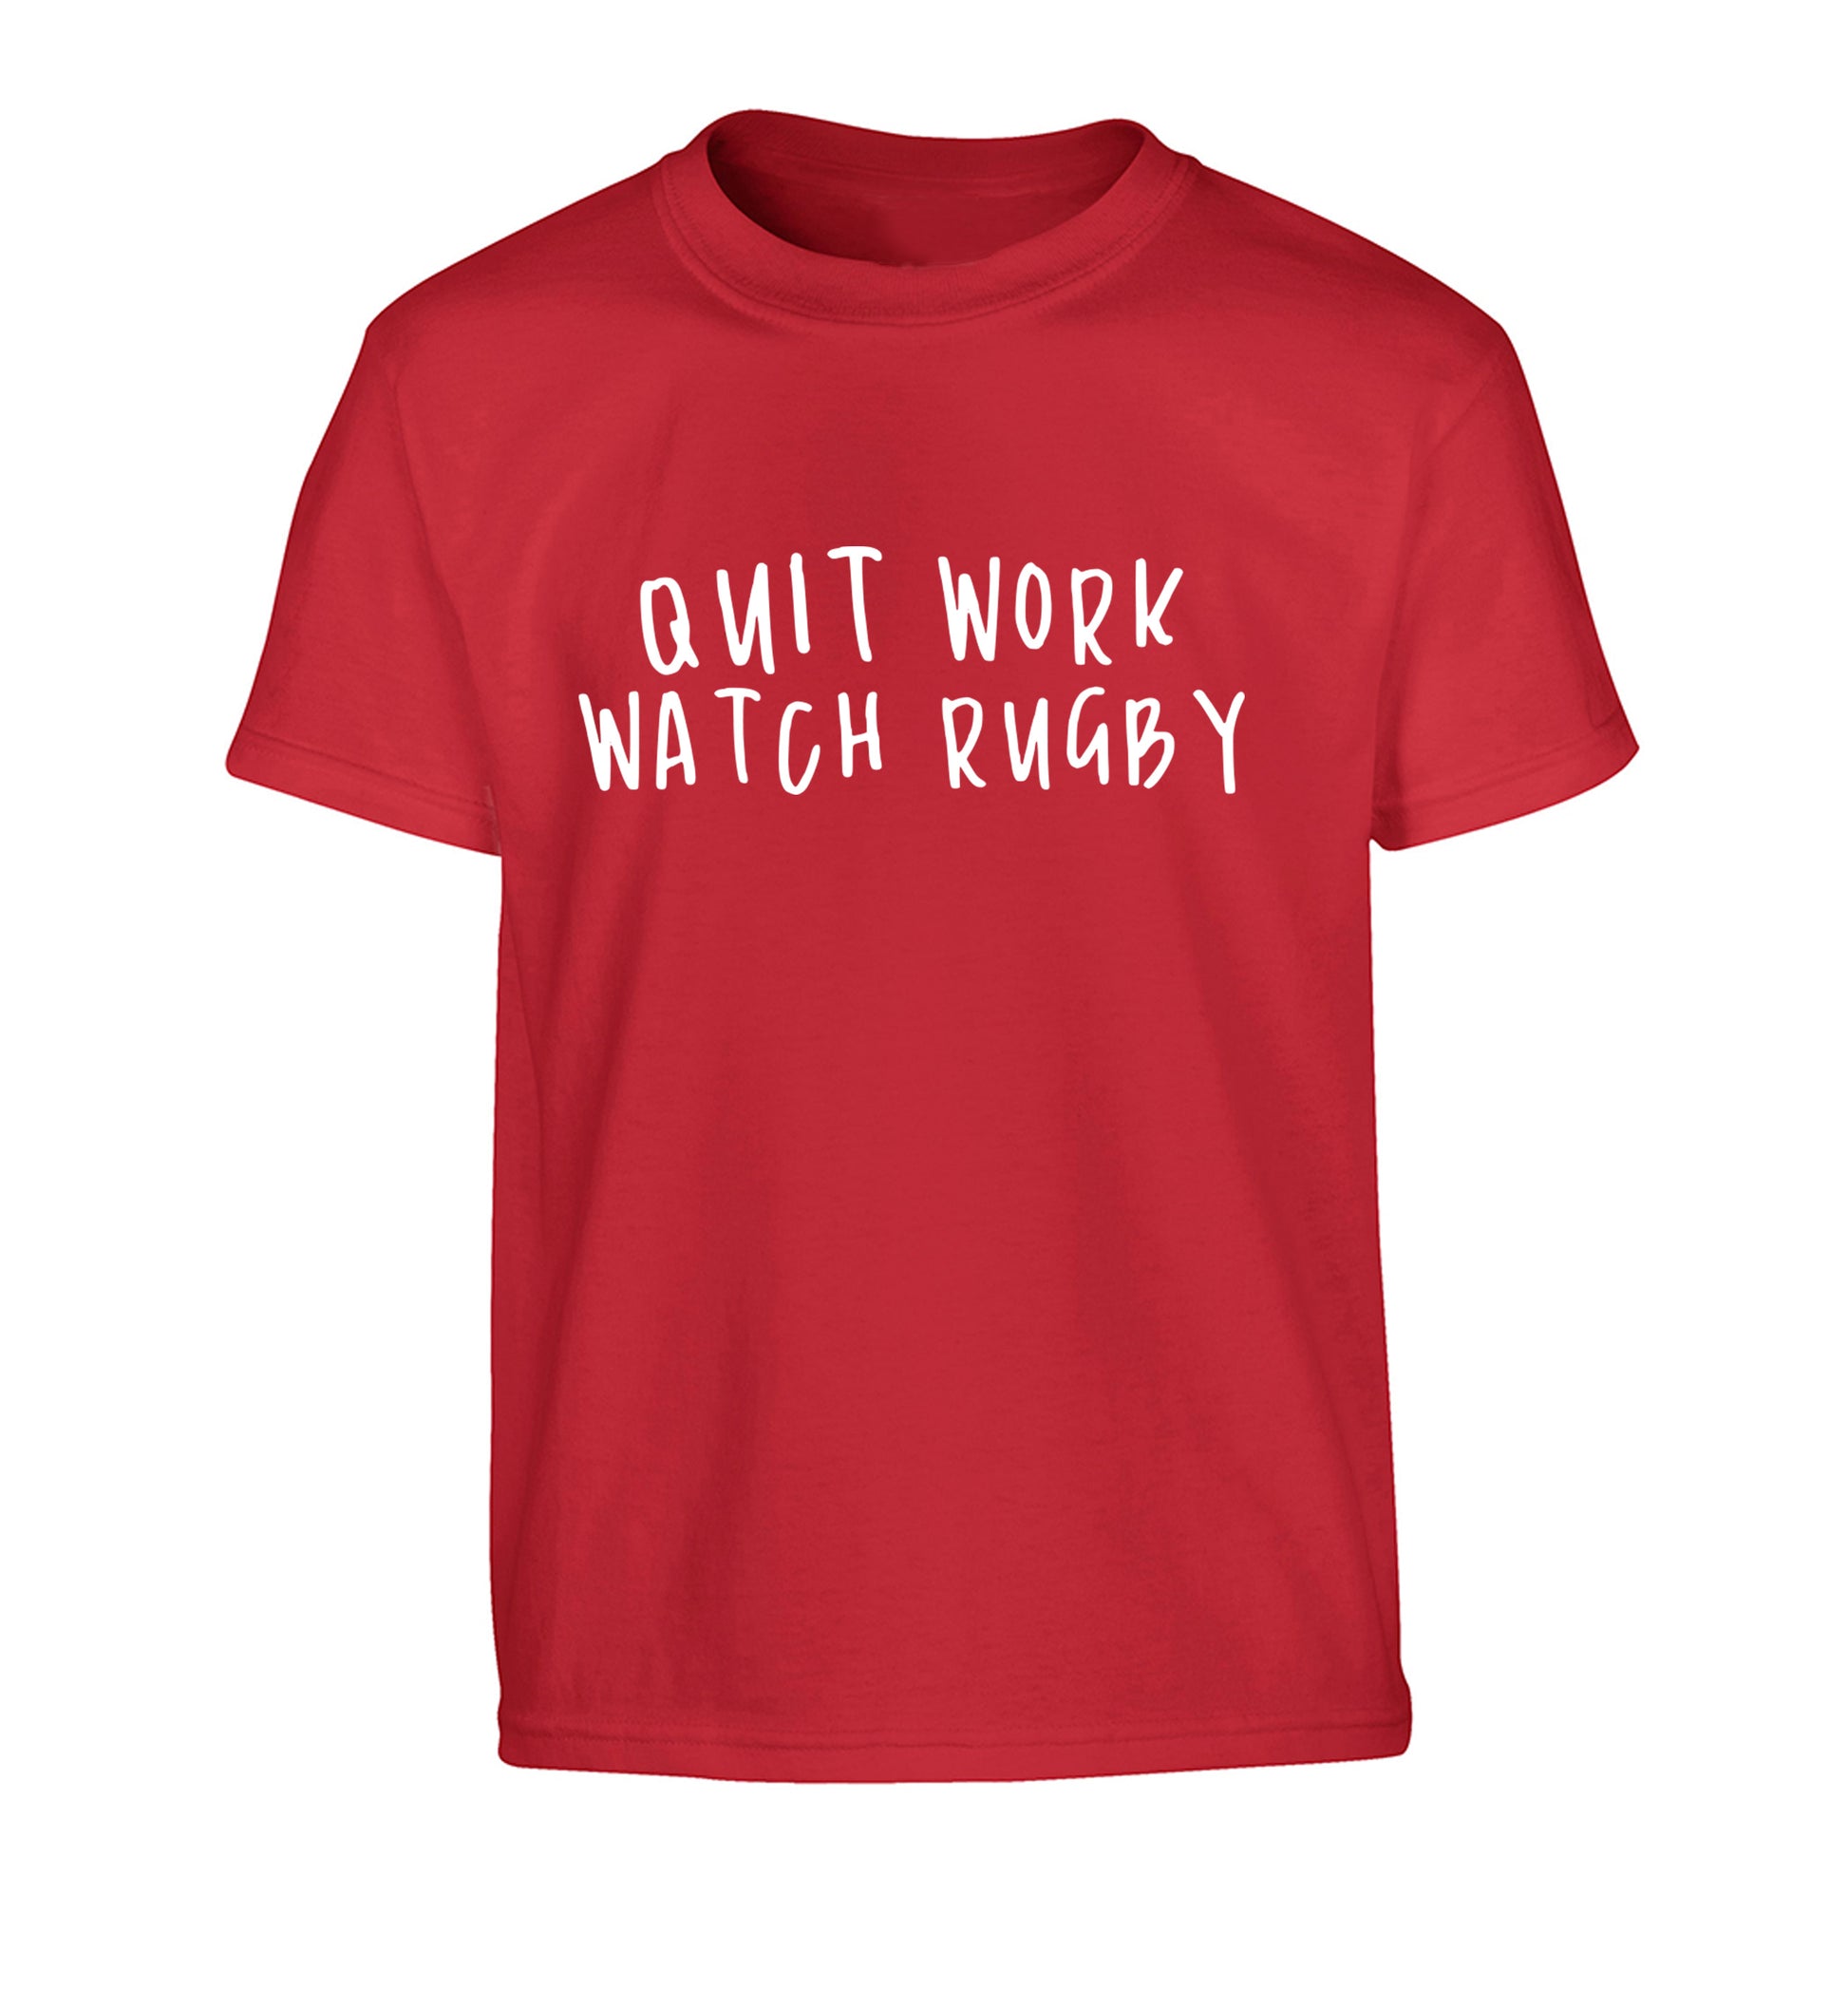 Quit work watch rugby Children's red Tshirt 12-13 Years